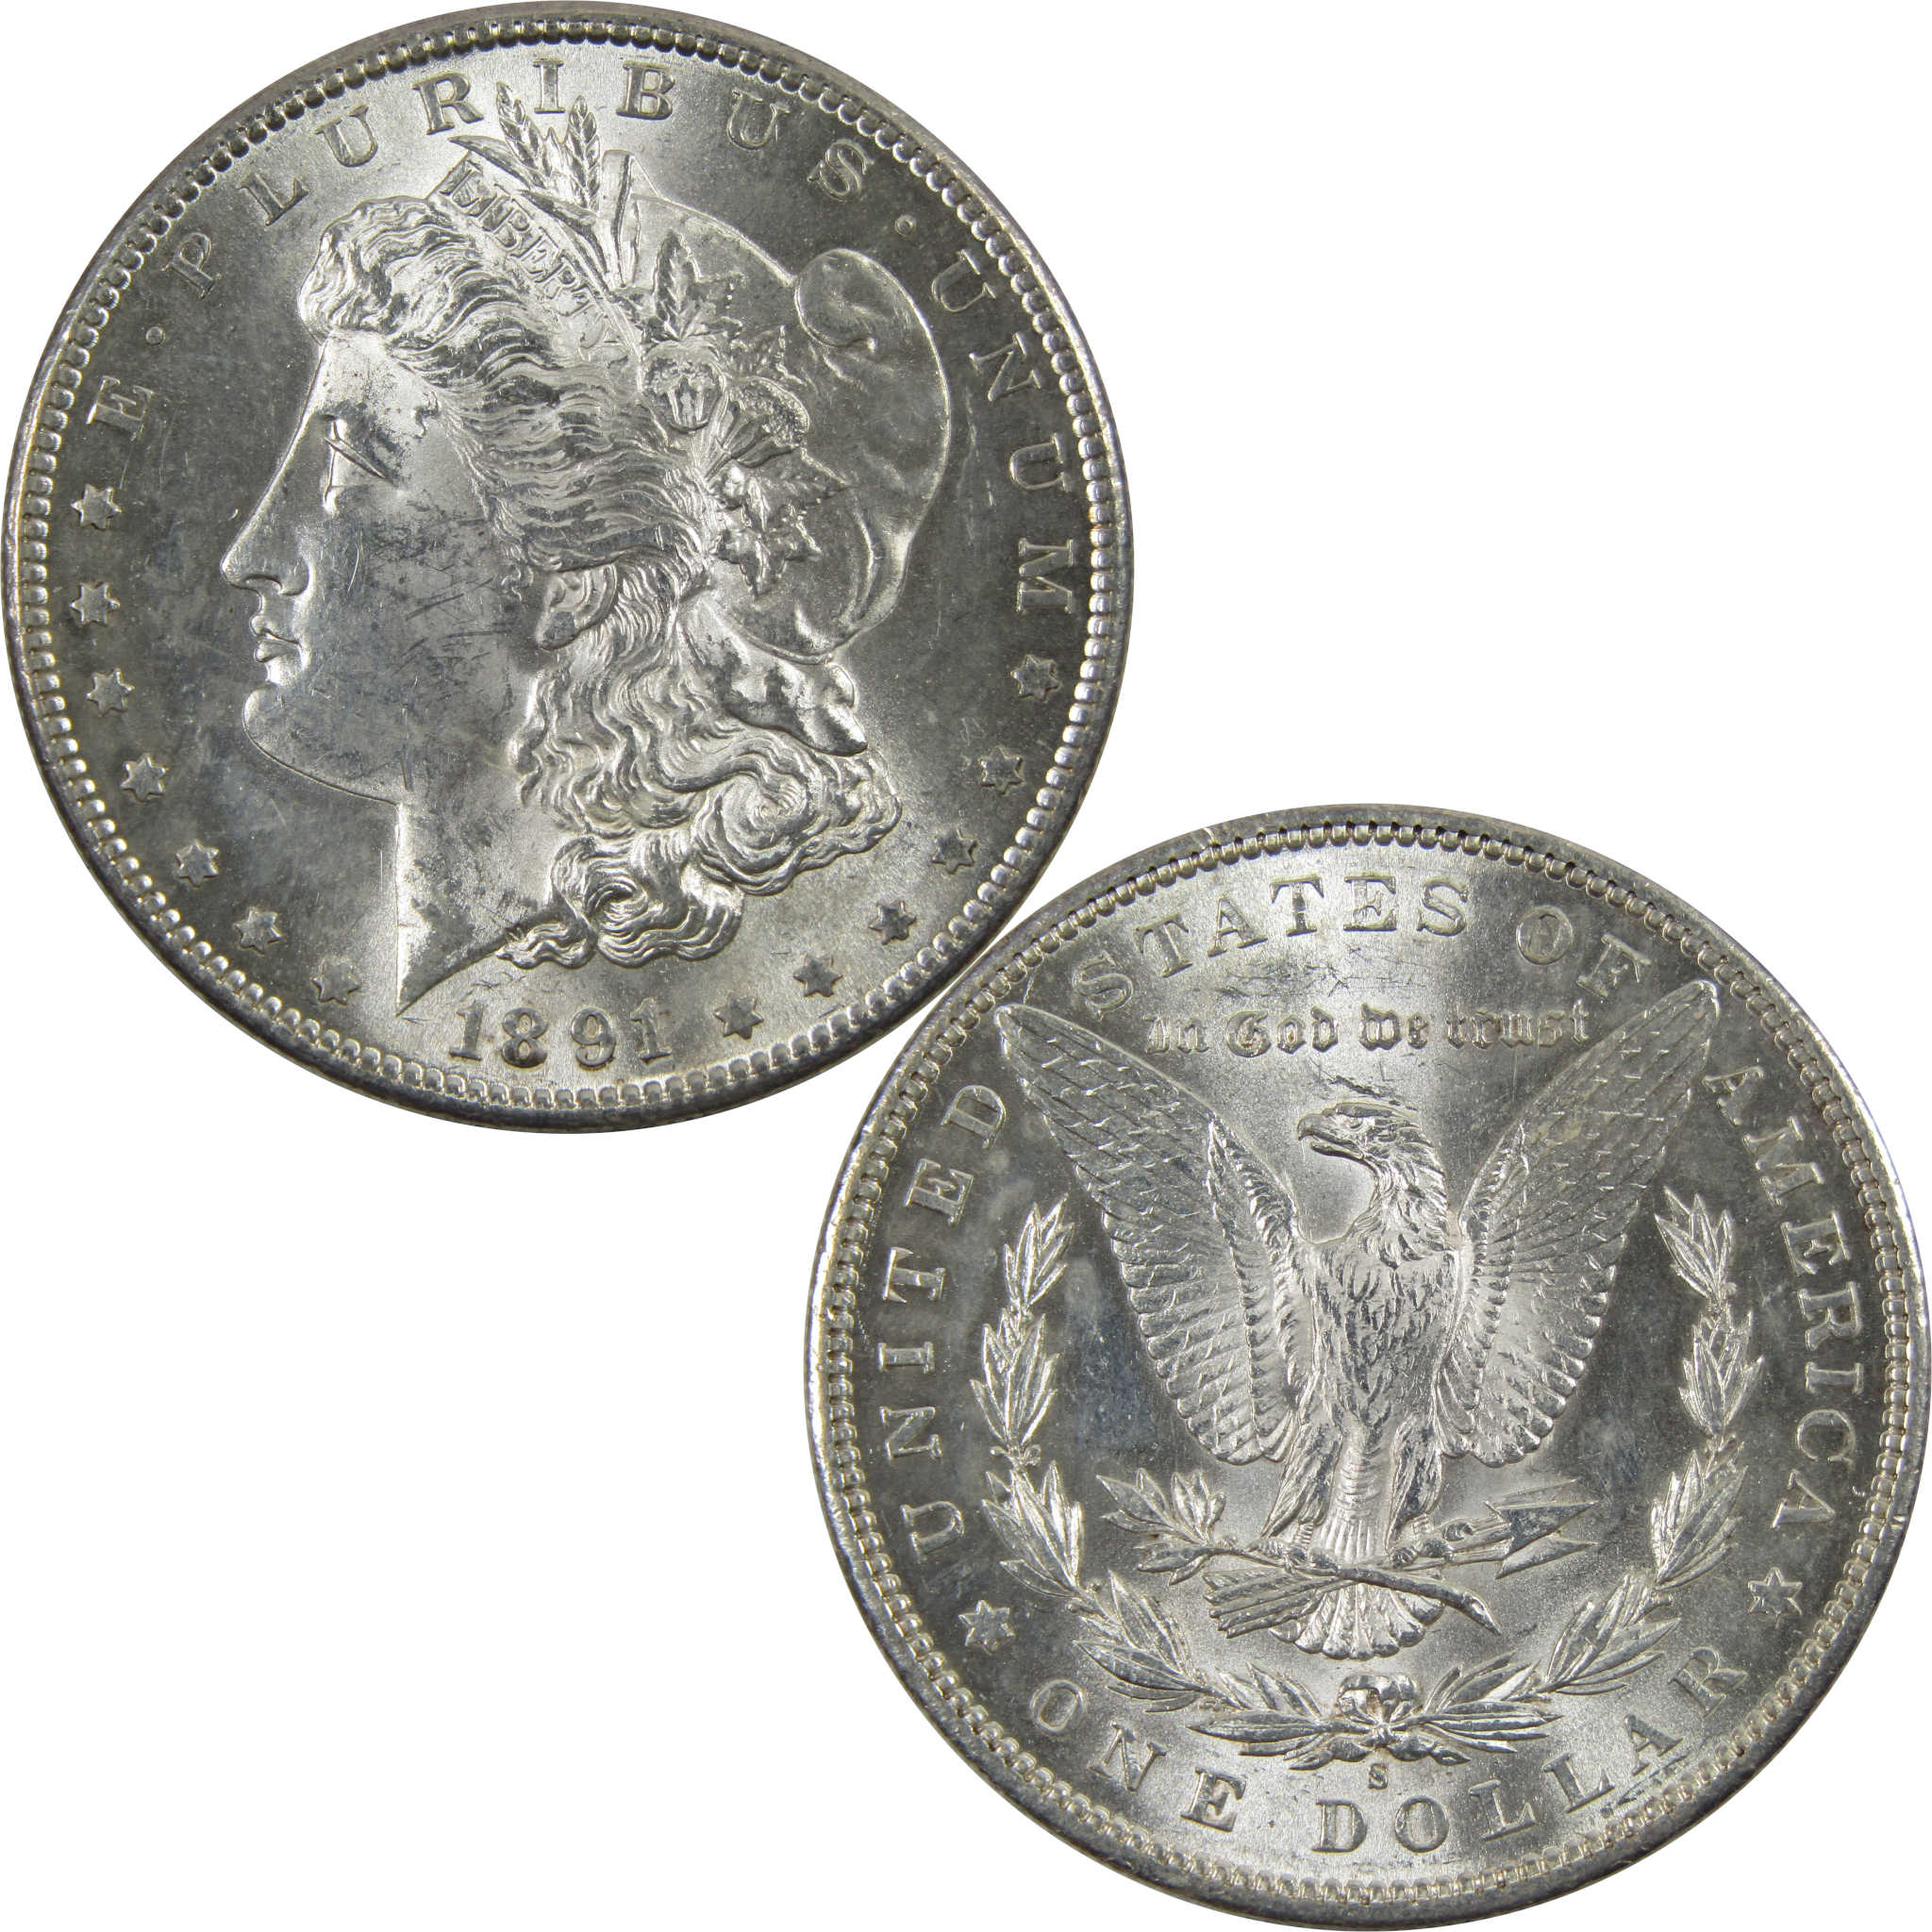 1891 S Morgan Dollar BU Uncirculated 90% Silver $1 Coin SKU:I5087 - Morgan coin - Morgan silver dollar - Morgan silver dollar for sale - Profile Coins &amp; Collectibles